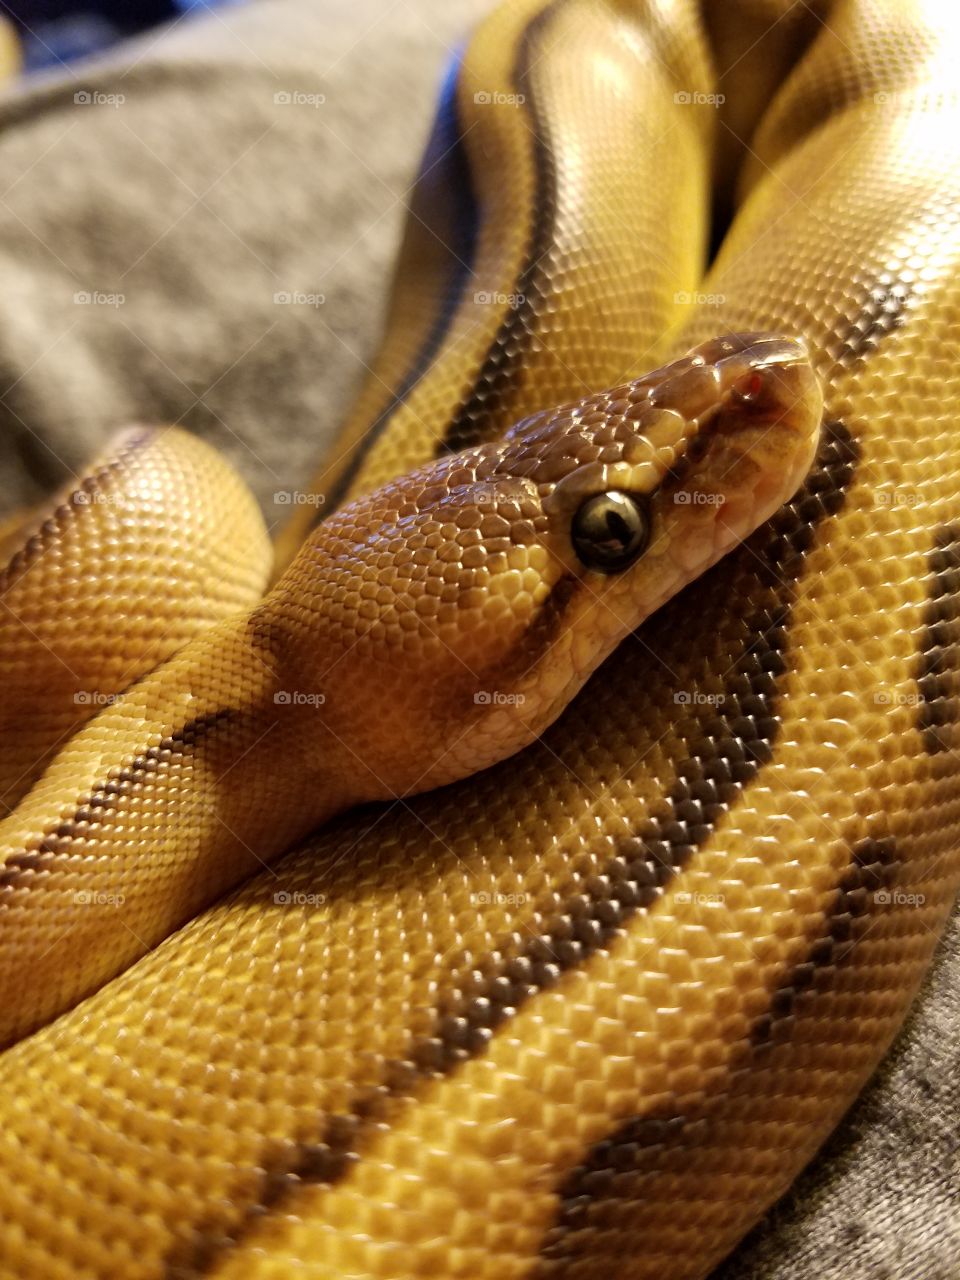 My ball python Macchiato relaxing on my pillow.